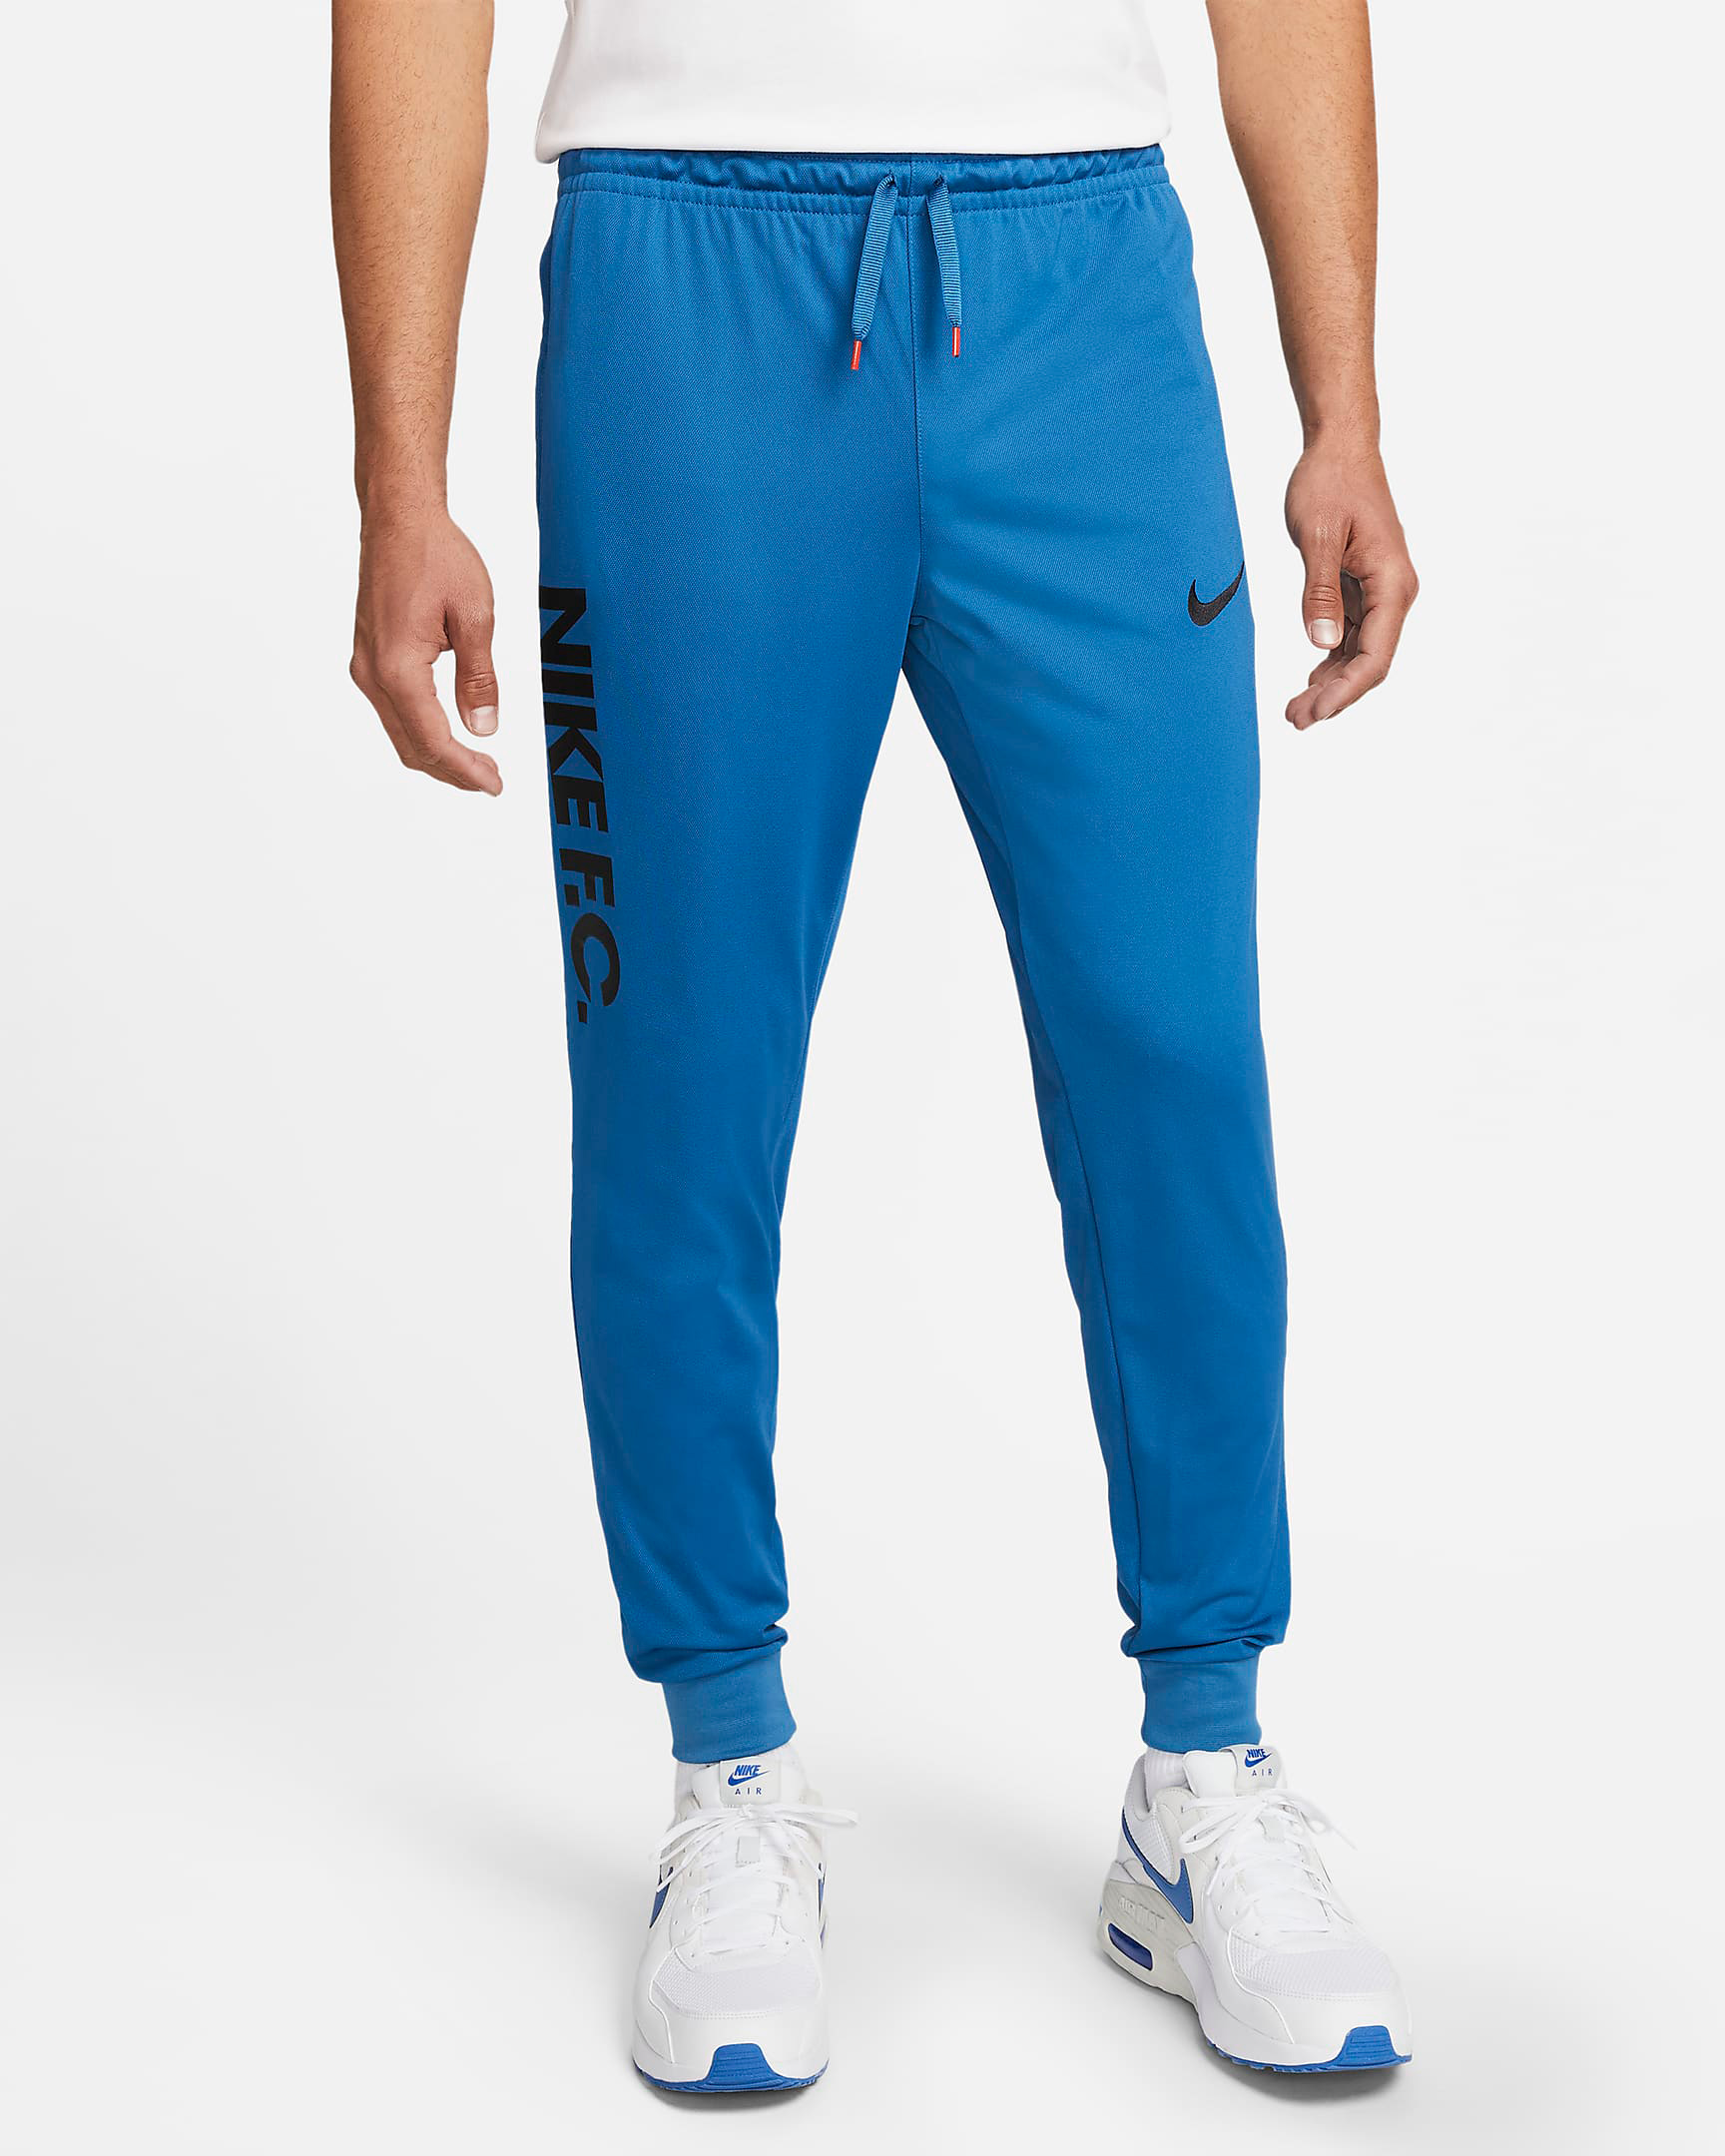 nike-fc-dark-marina-blue-pants-1